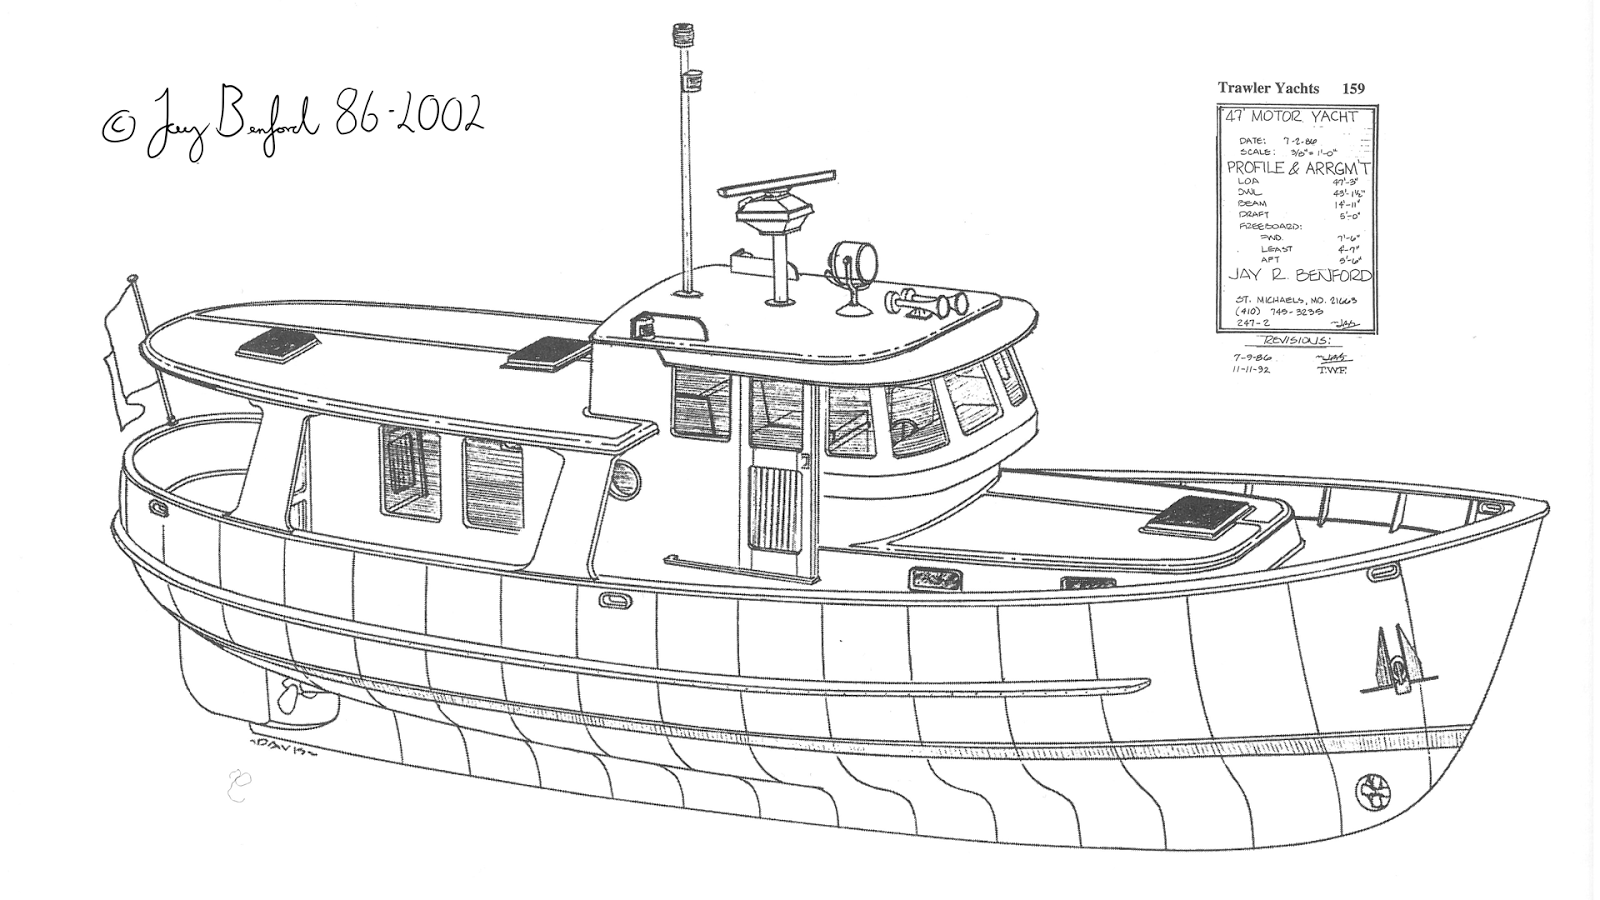 Boat Model Plans Free ~ My Boat Plans